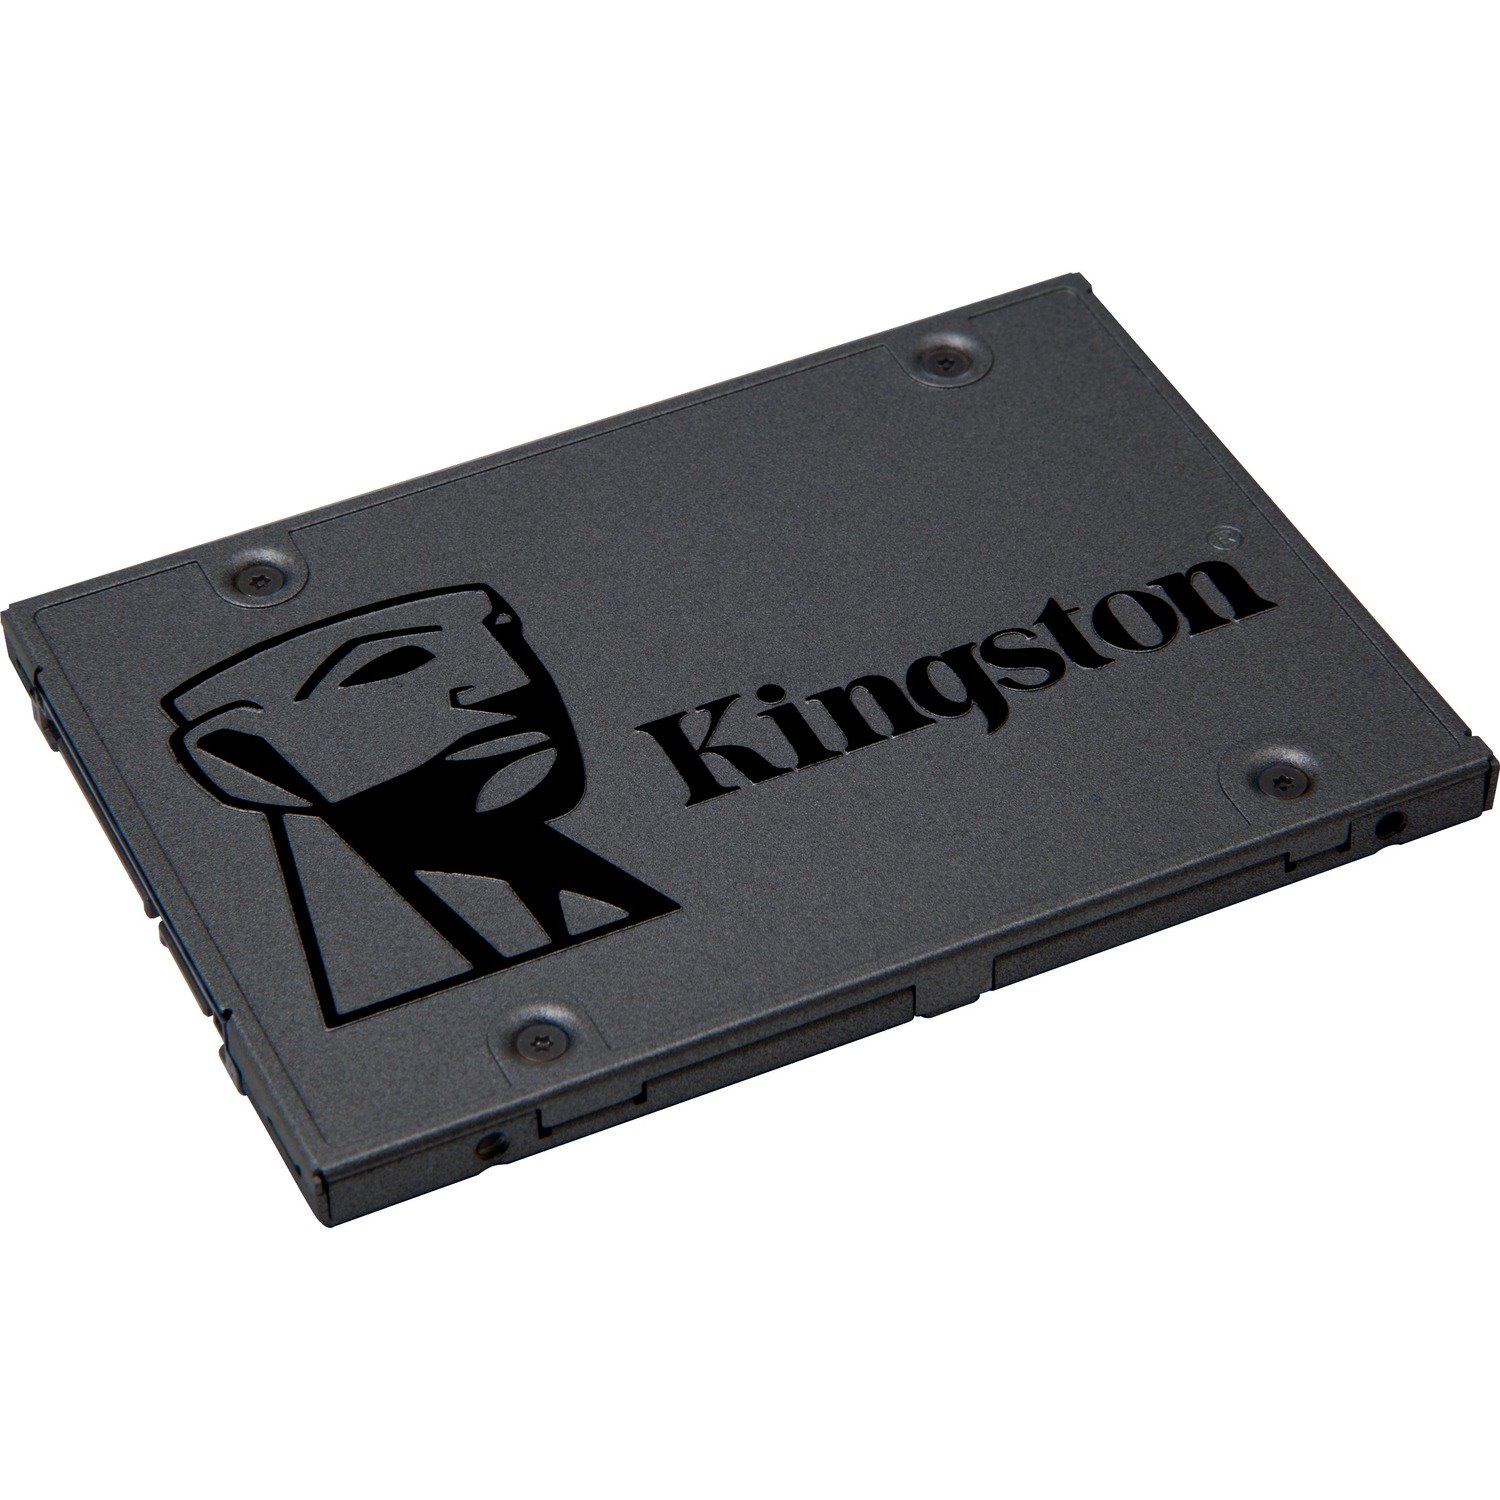 Disque Kingston de 480 GB SSD de 2.5" Interna SATA 600 